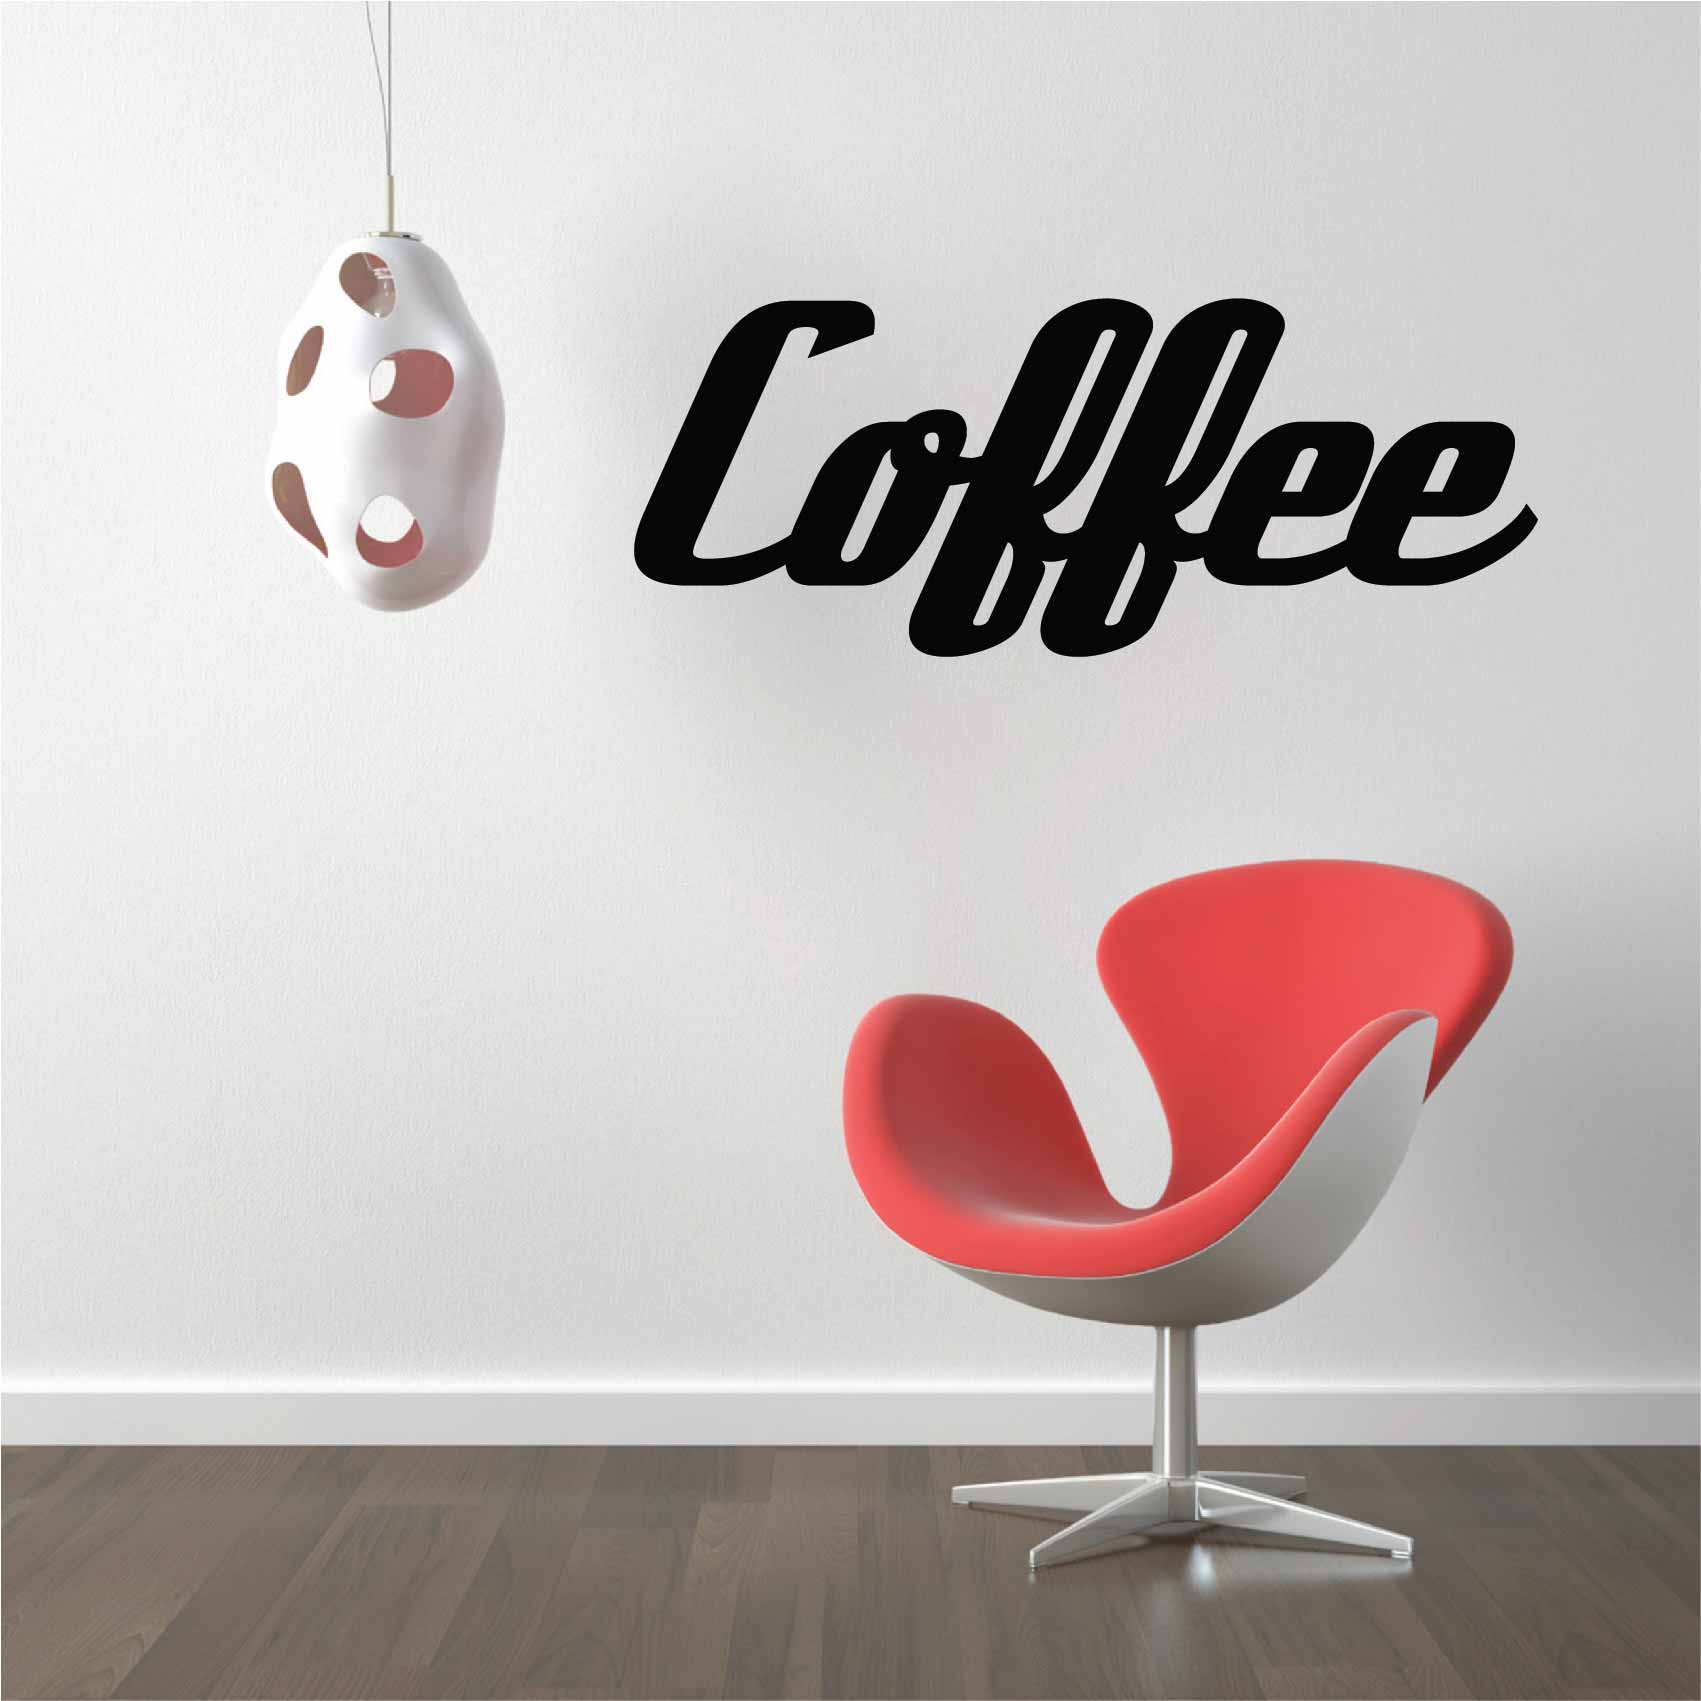 stickers-mural-coffee-ref33cafe-stickers-muraux-café-autocollant-deco-chambre-salon-cuisine-sticker-mural-cafe-coffee